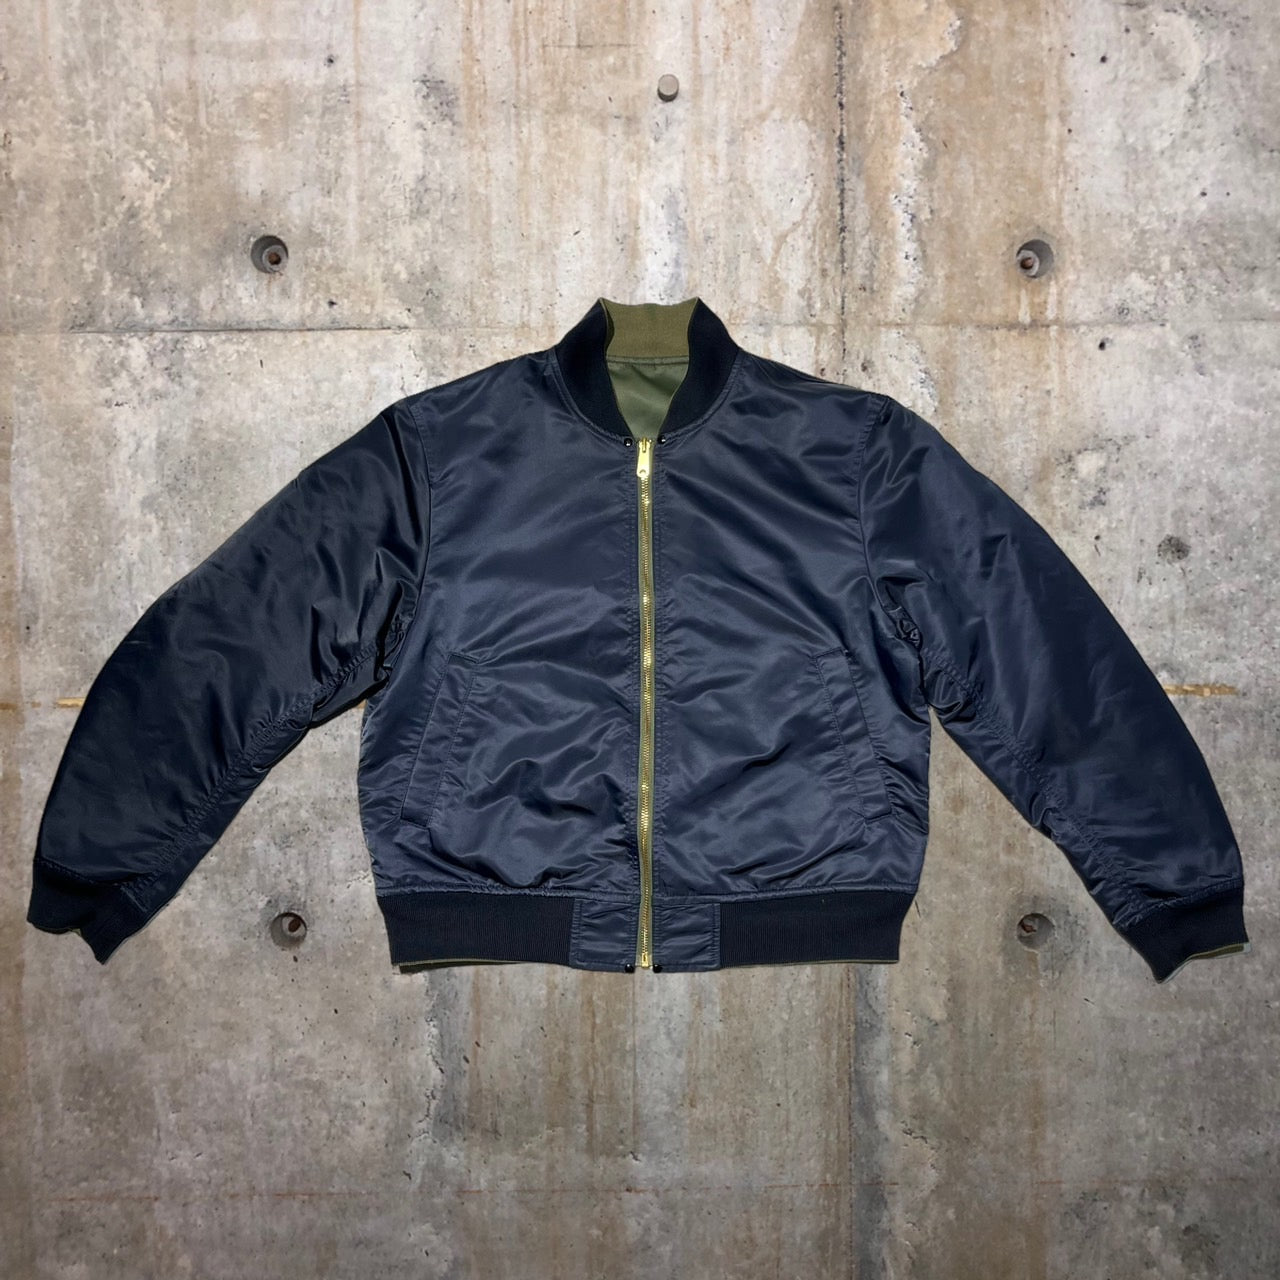 TOGA VIRILIS(トーガビリリース) Nylon twill bomber jacket TV52-FC313 46 カーキ×ネイビー